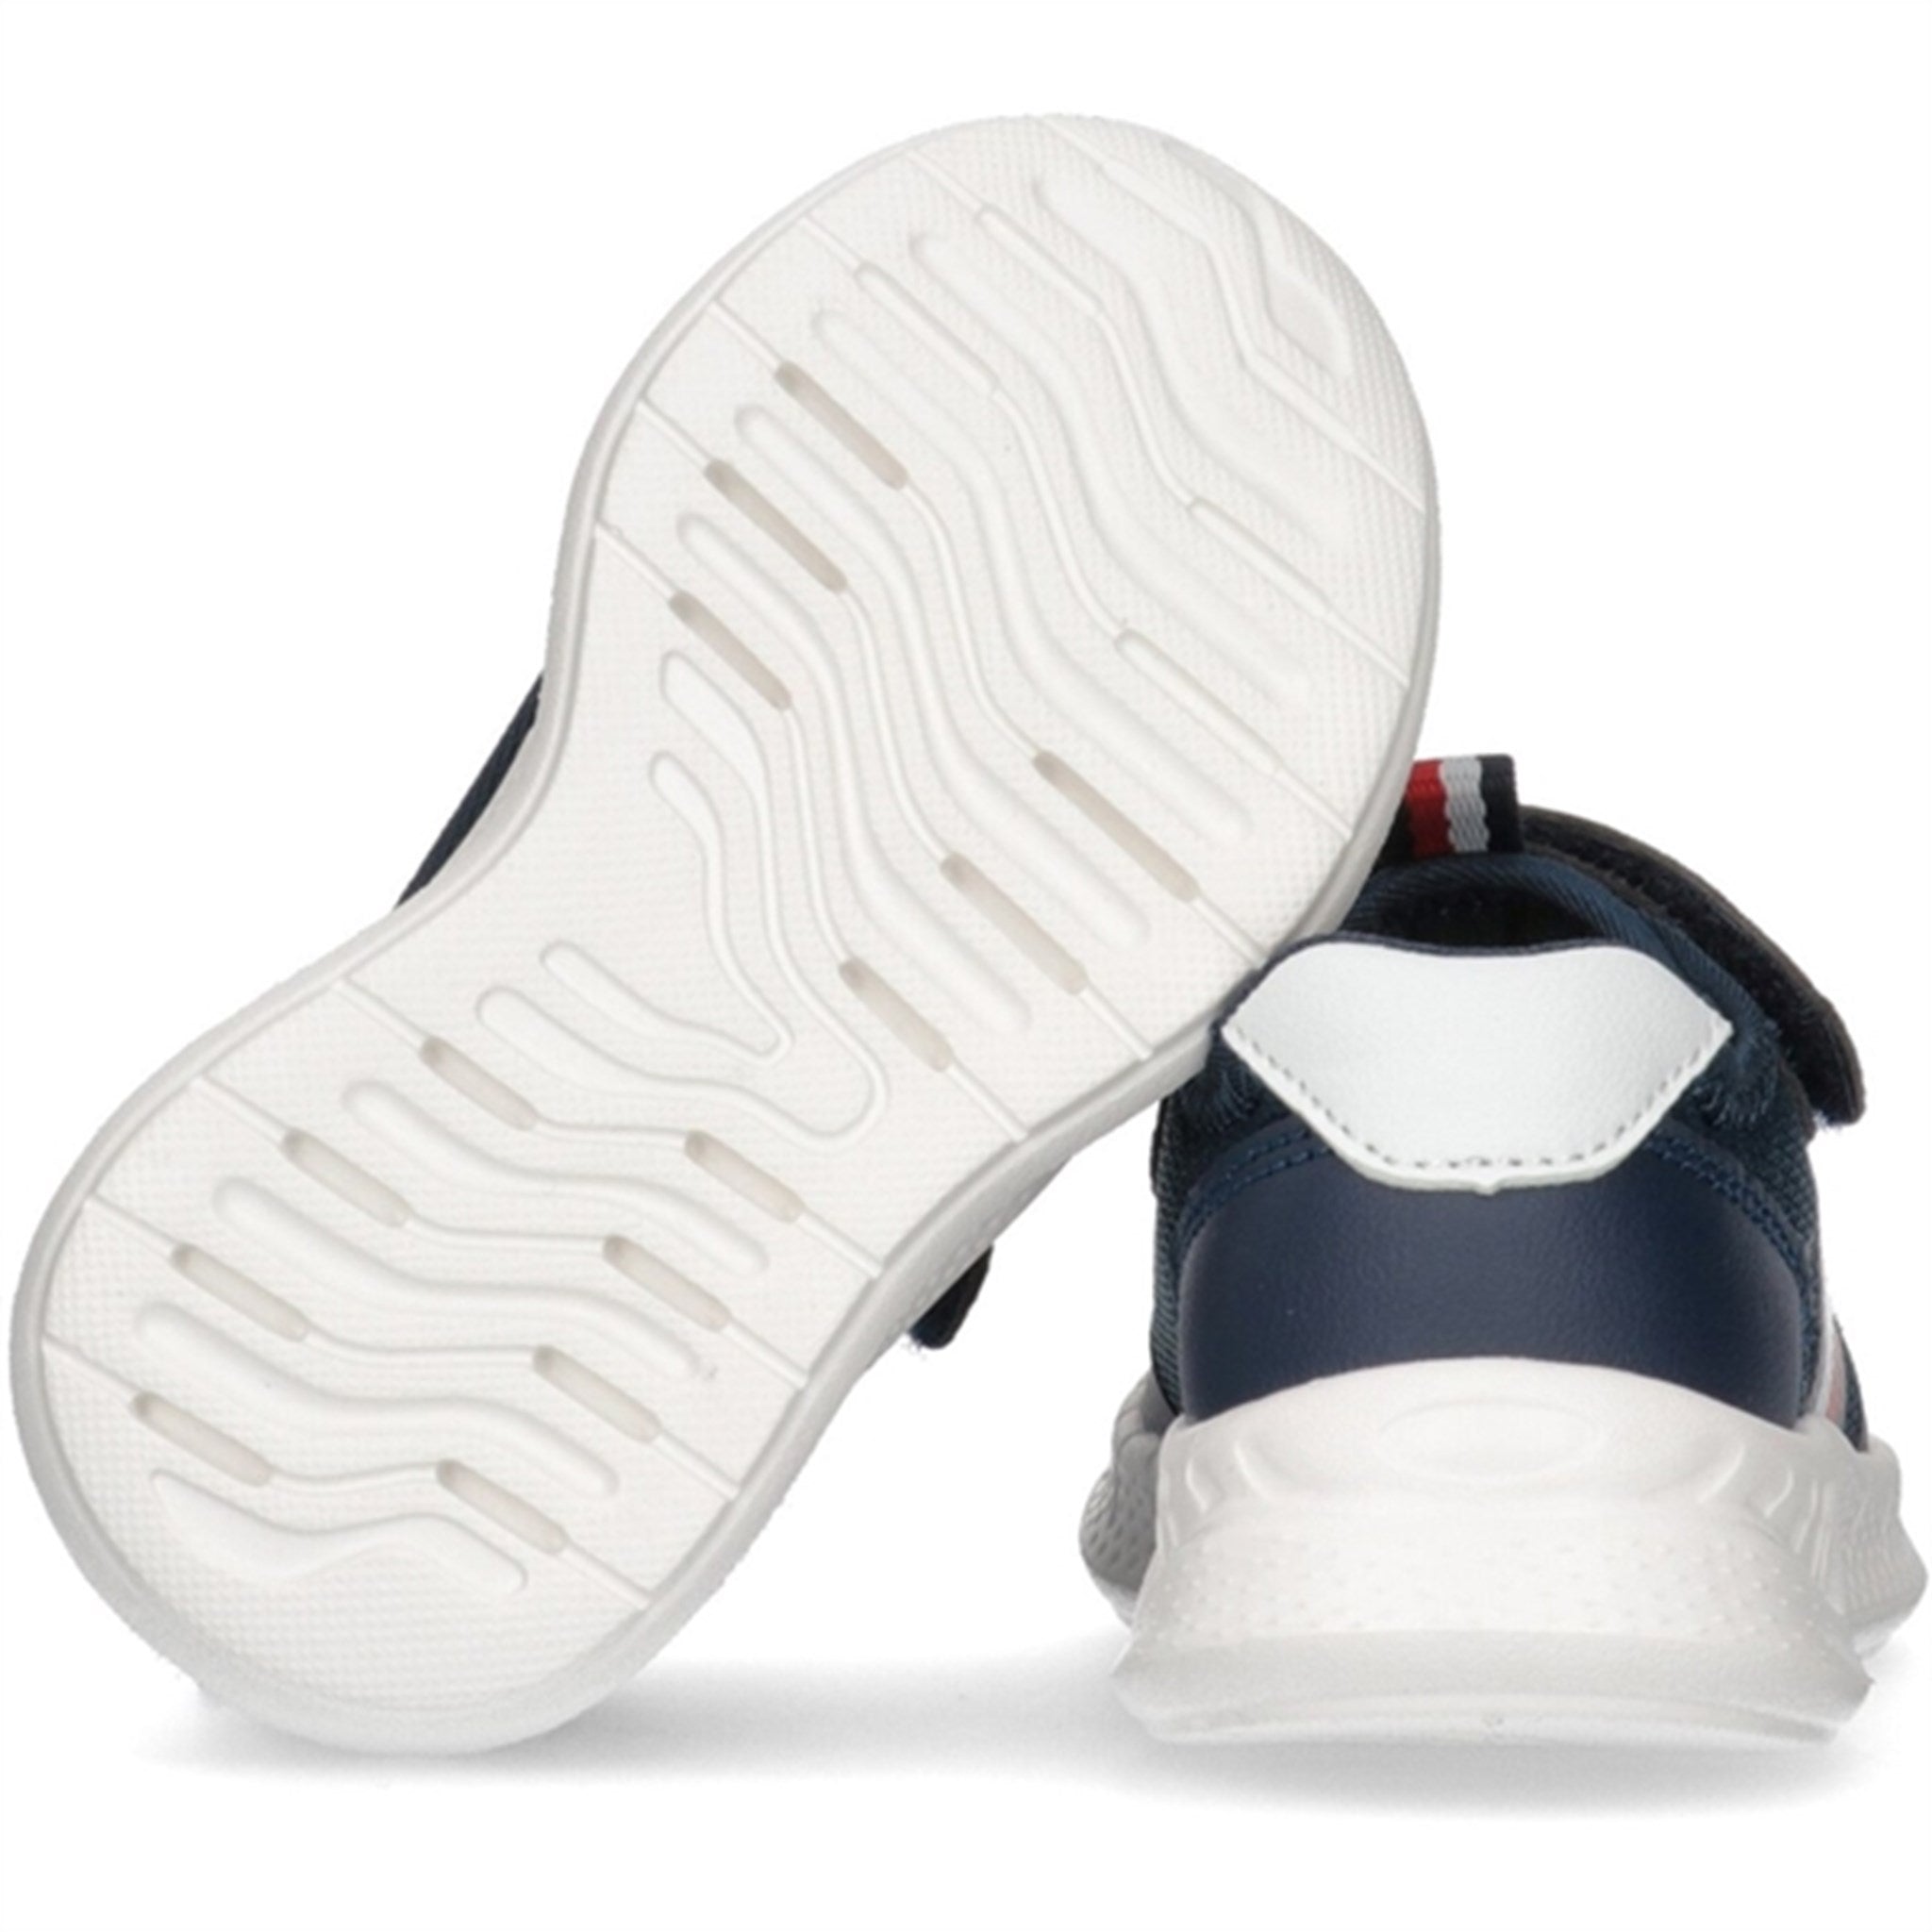 Tommy Hilfiger Stripes Low Cut Lace-up Velcro Sneaker Blue/White 5